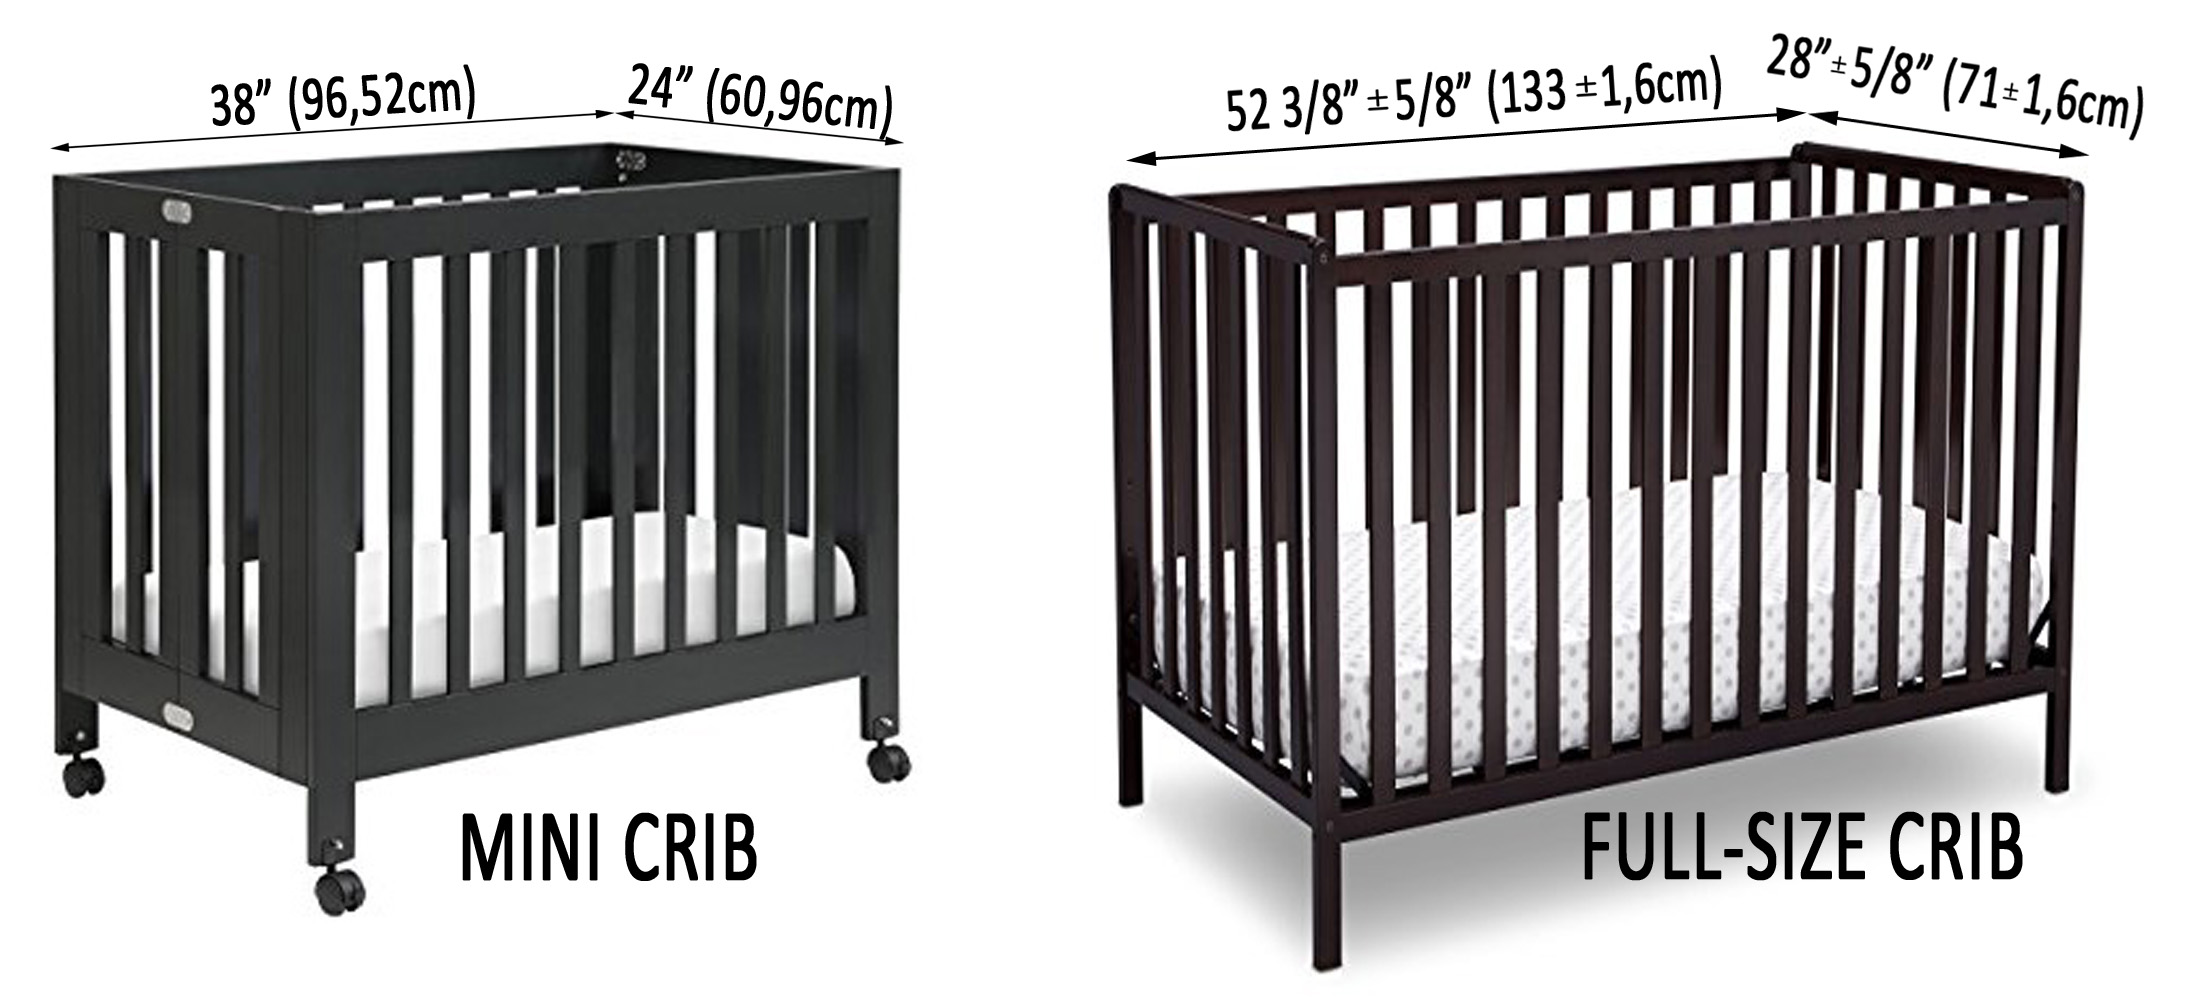 standard size crib mattress measurements